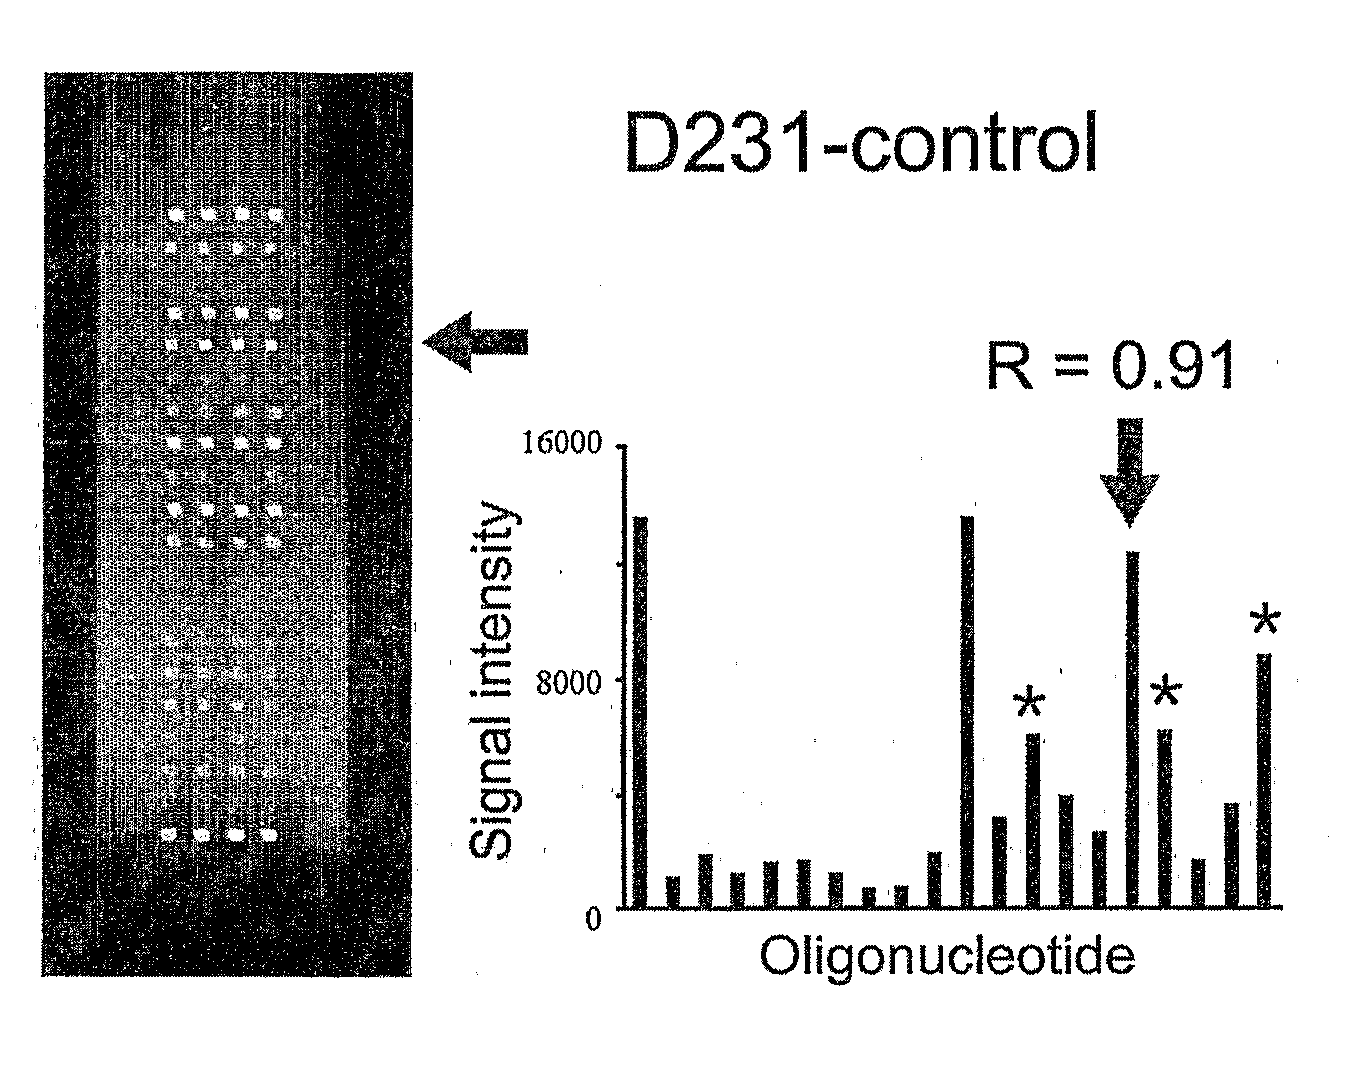 K-Ras Oligonucleotide Microarray and Method for Detecting K-Ras Mutations Employing the Same